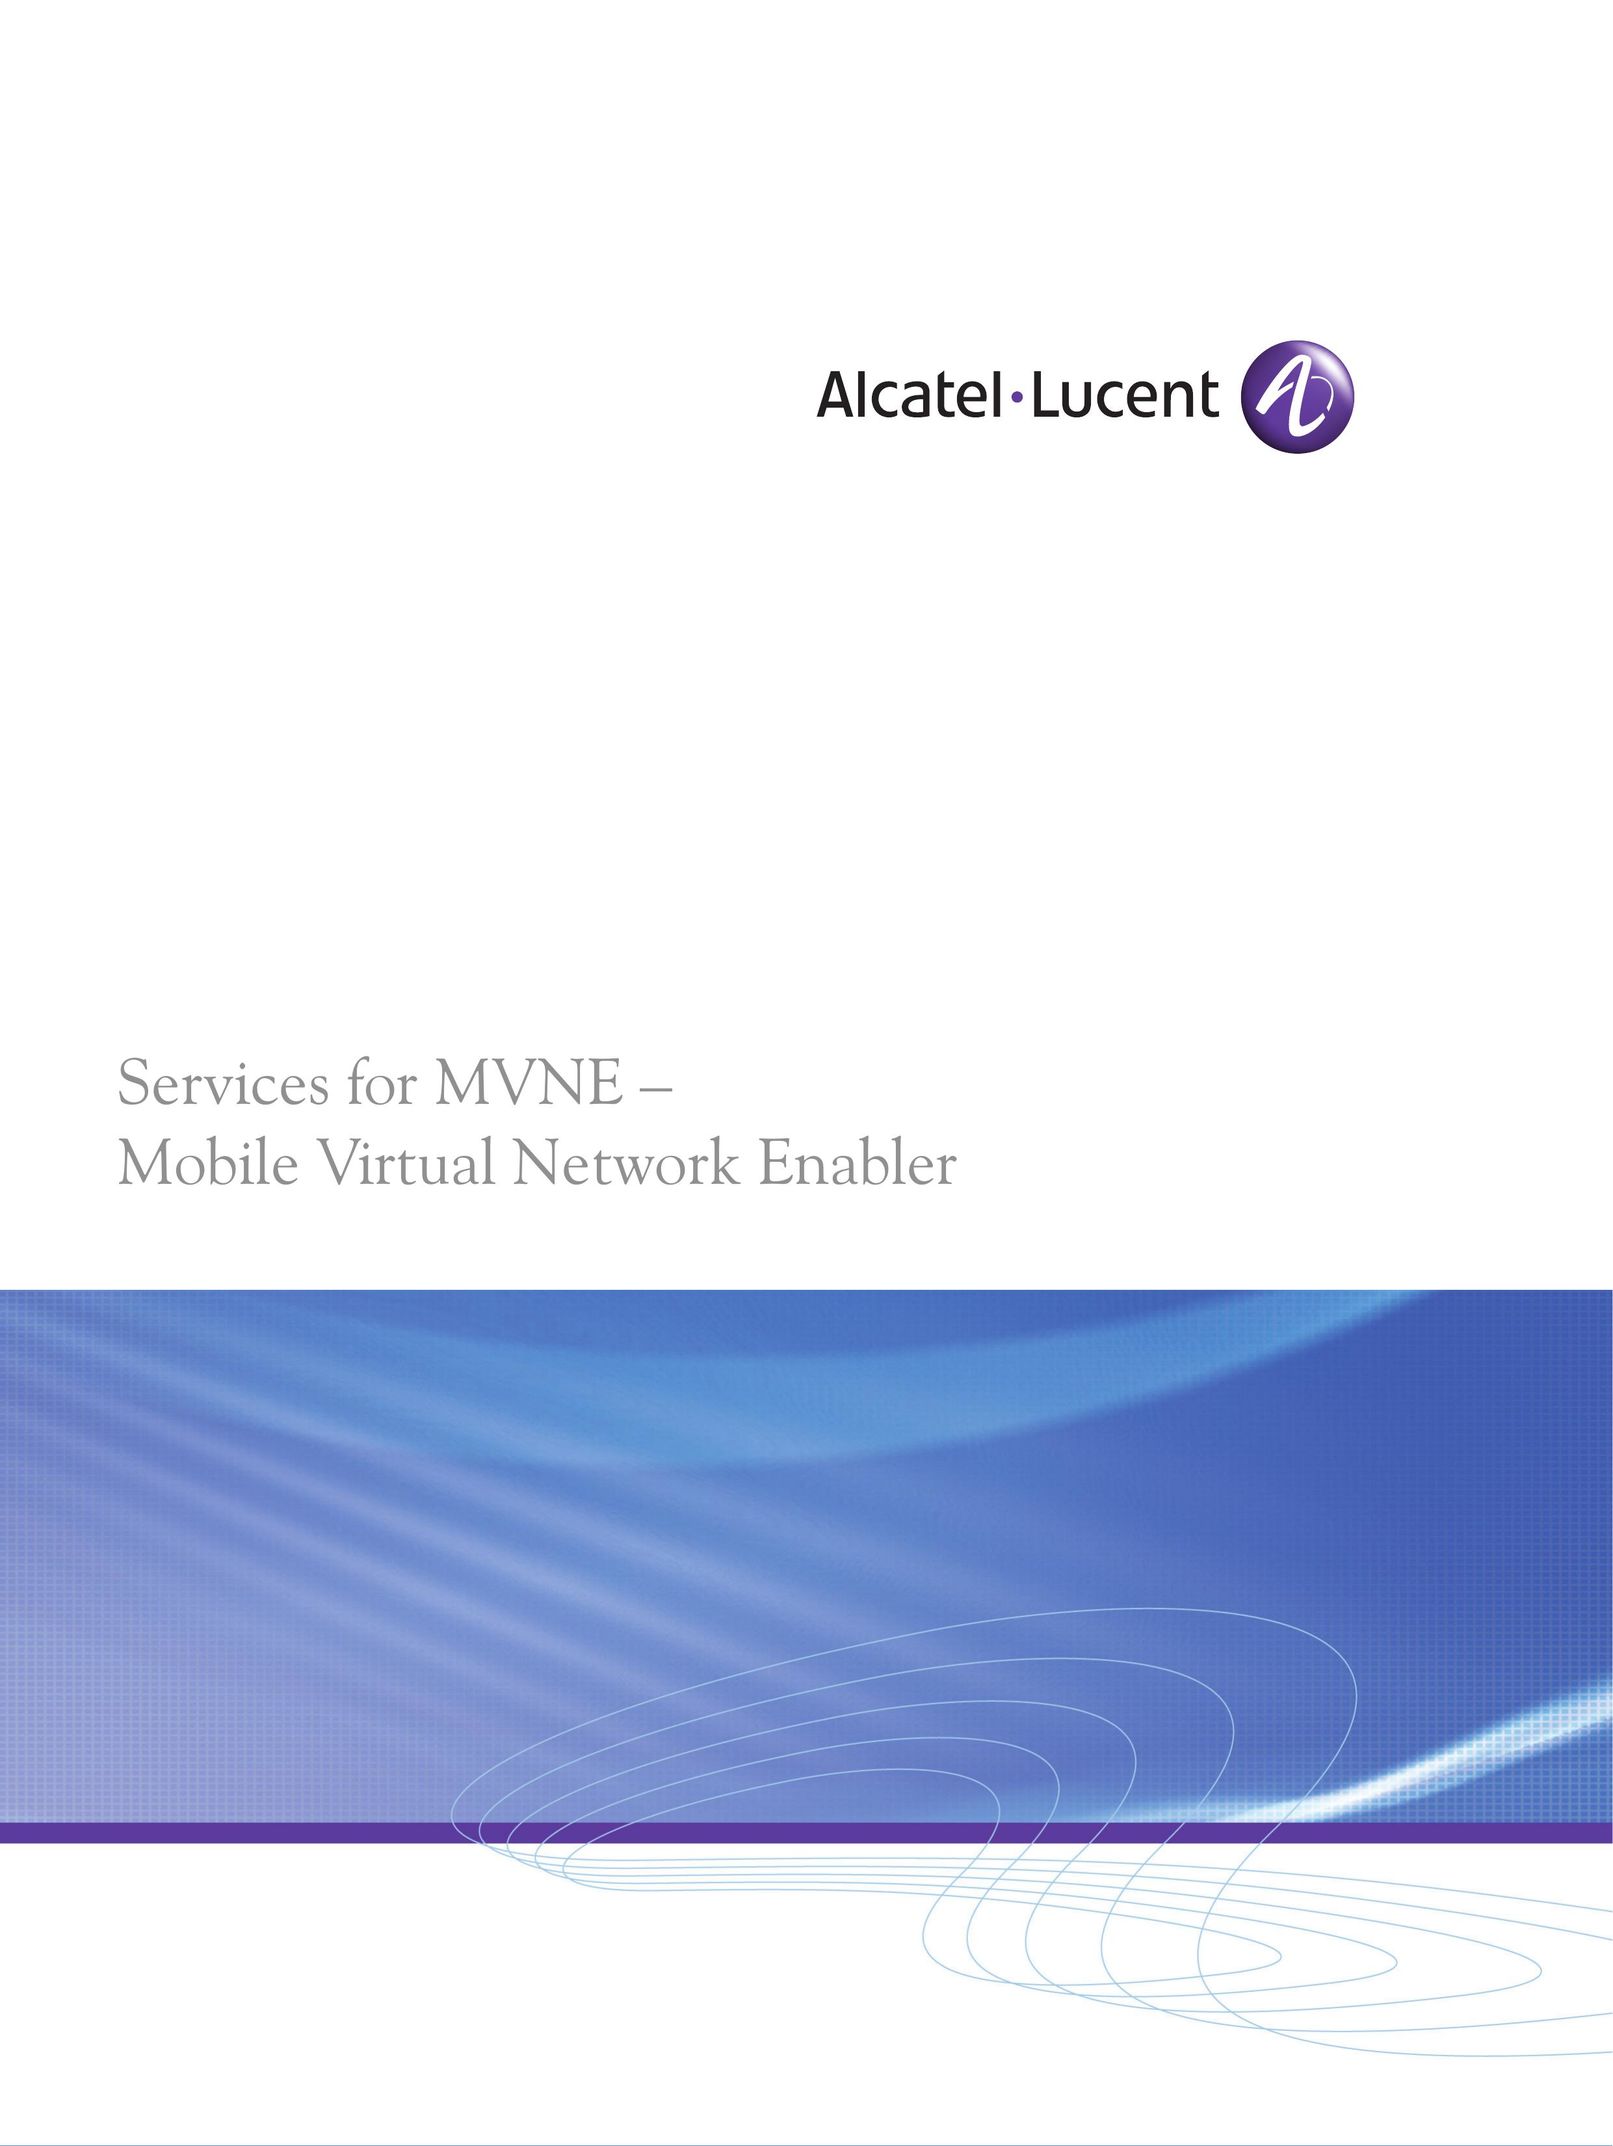 Alcatel-Lucent MVNE Network Card User Manual